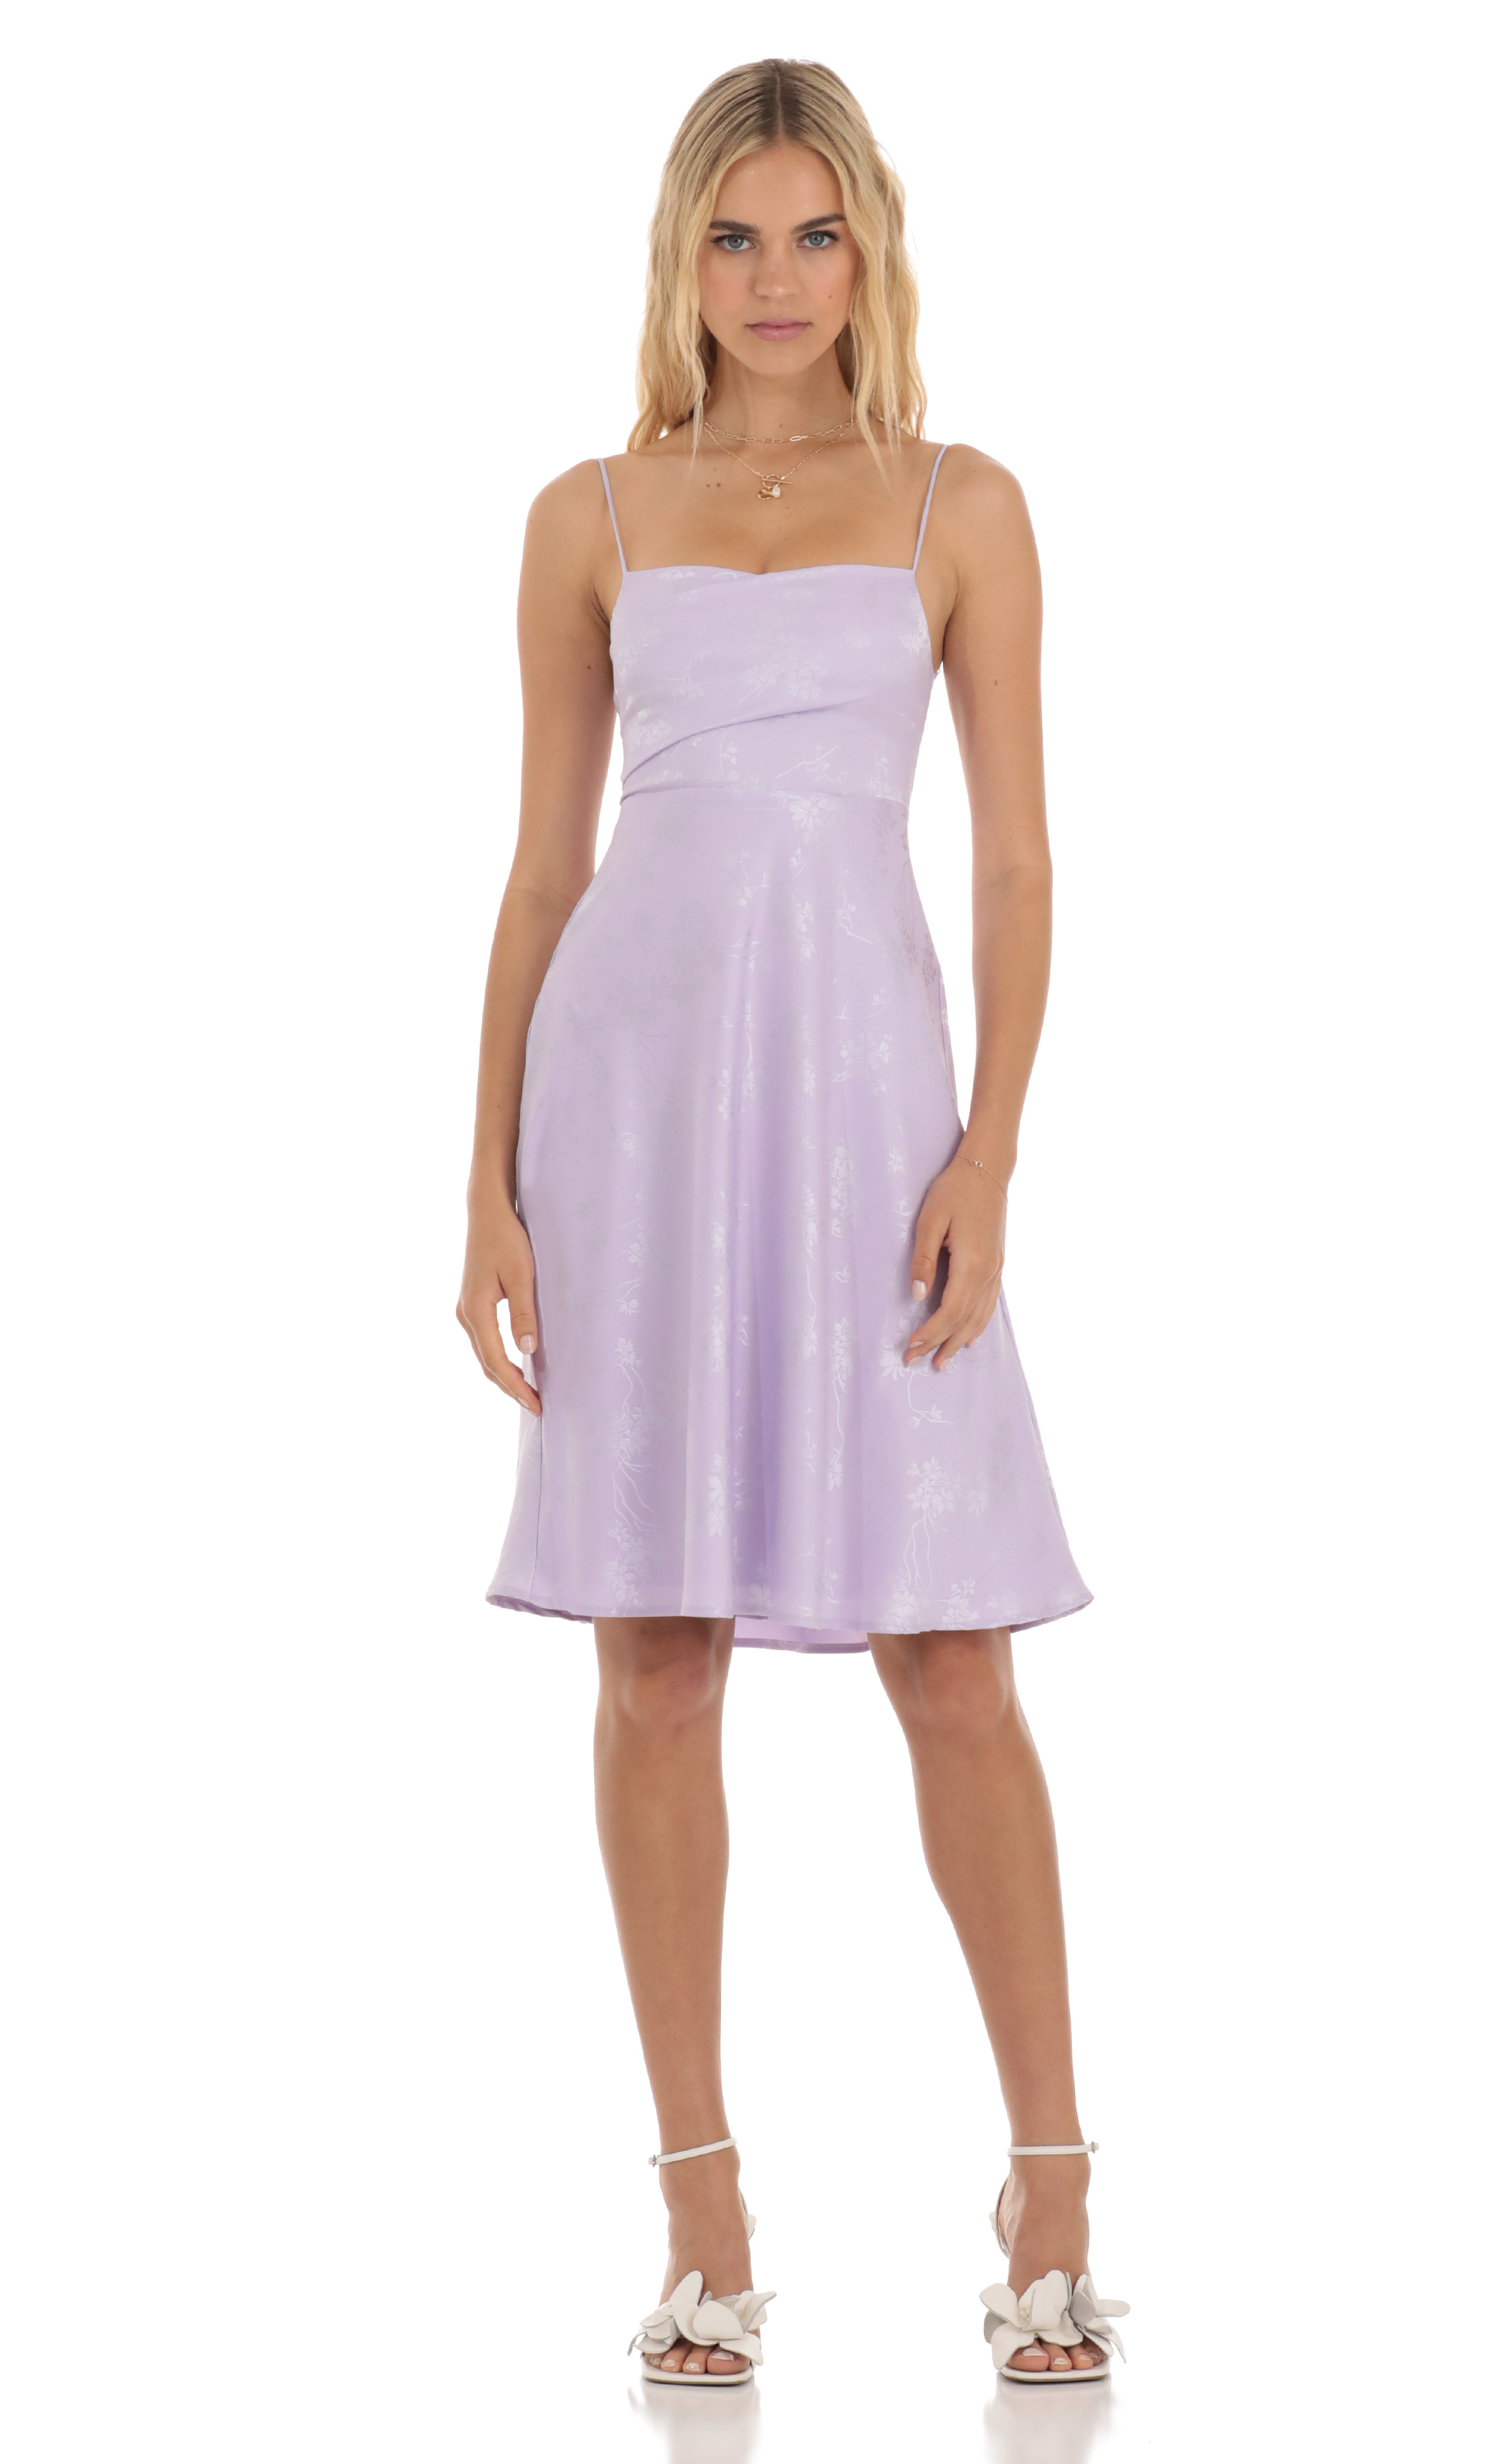 Finnian Jacquard Dress in Lavender